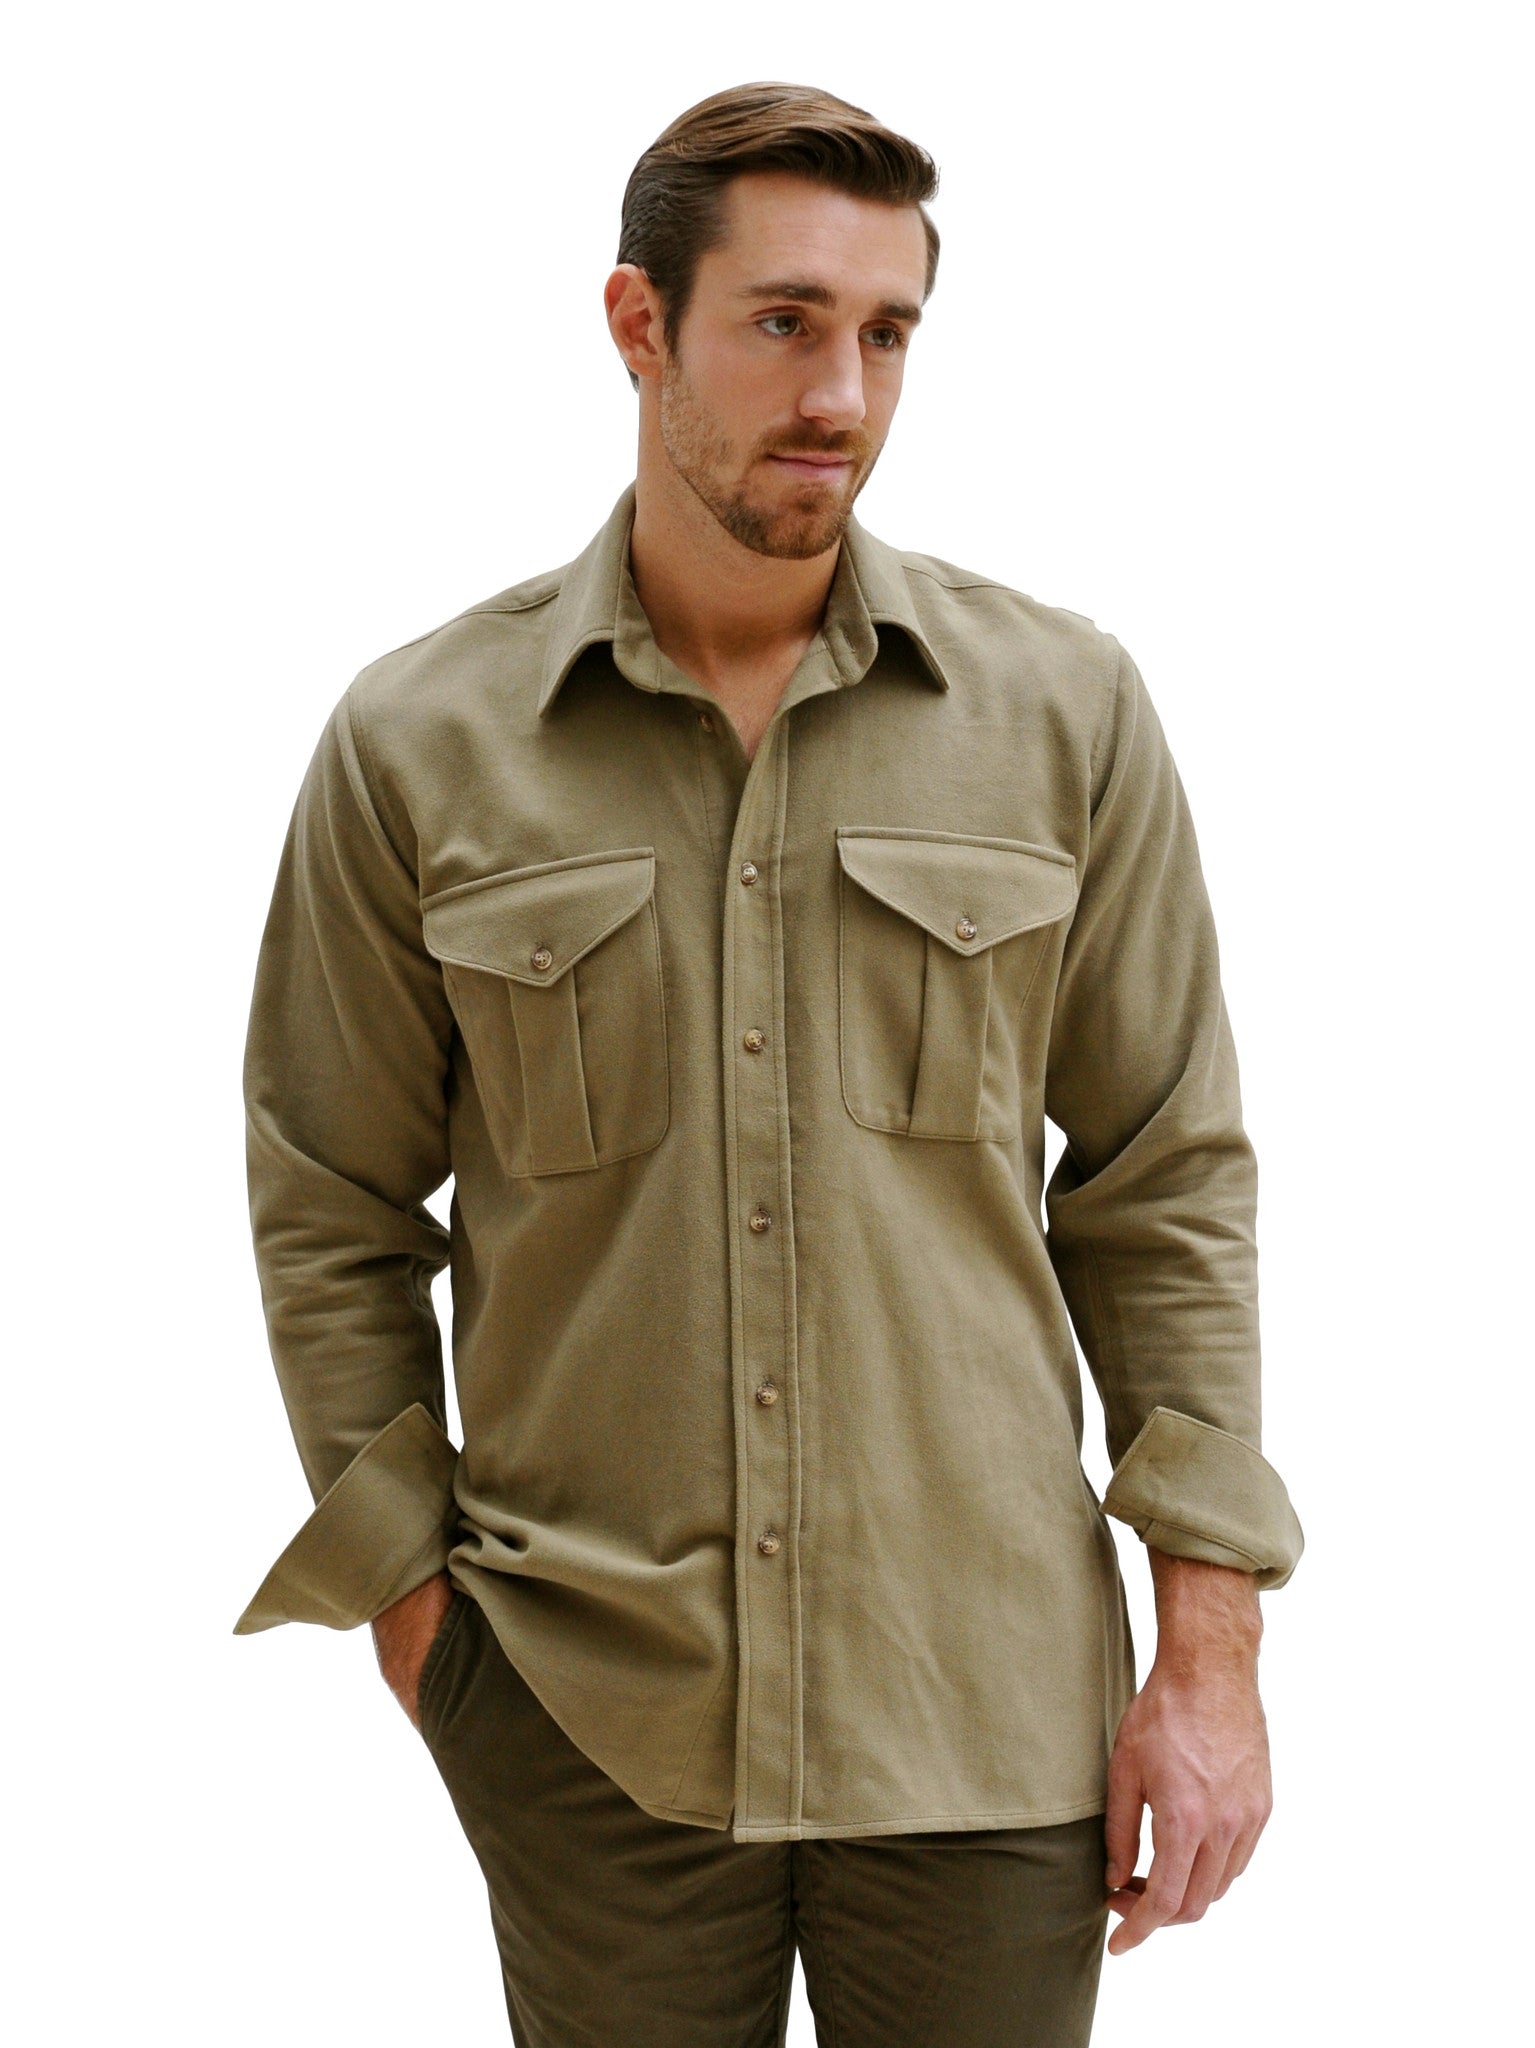 MEN'S SAFARI SHIRT, Shirt, Hickman & Bousfield - Hickman & Bousfield, Safari and Travel Clothing